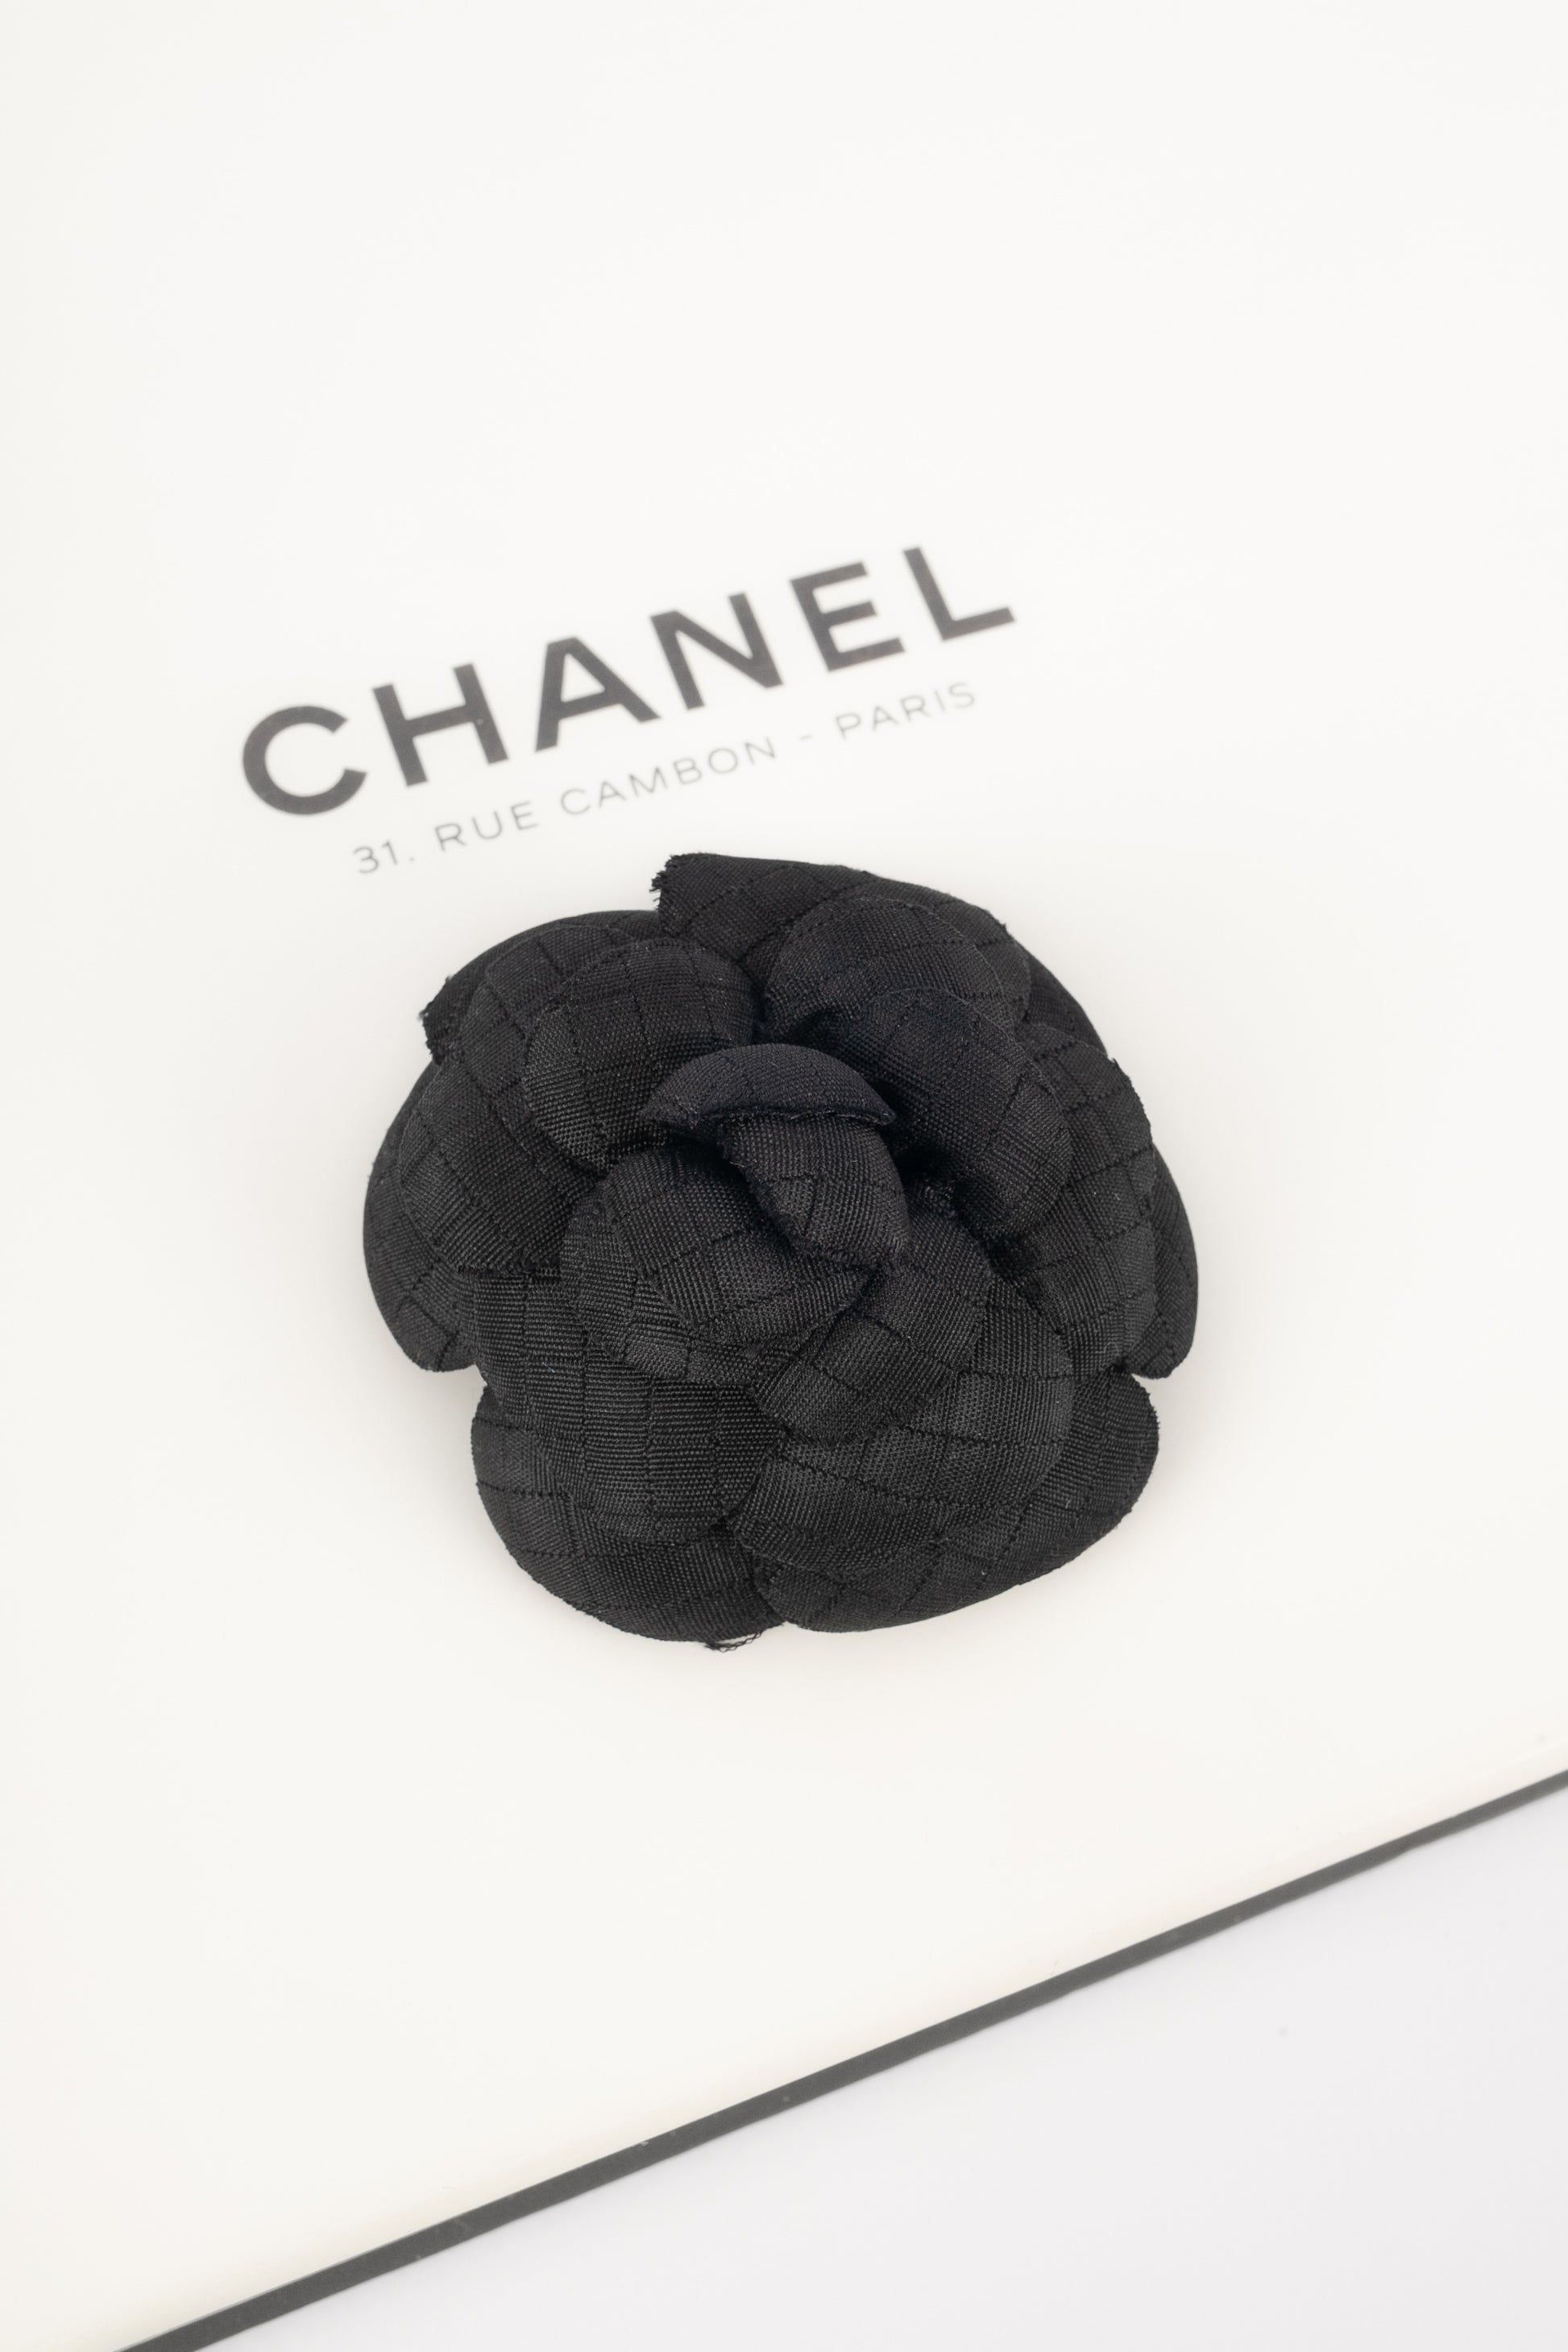 Broche camélia Chanel